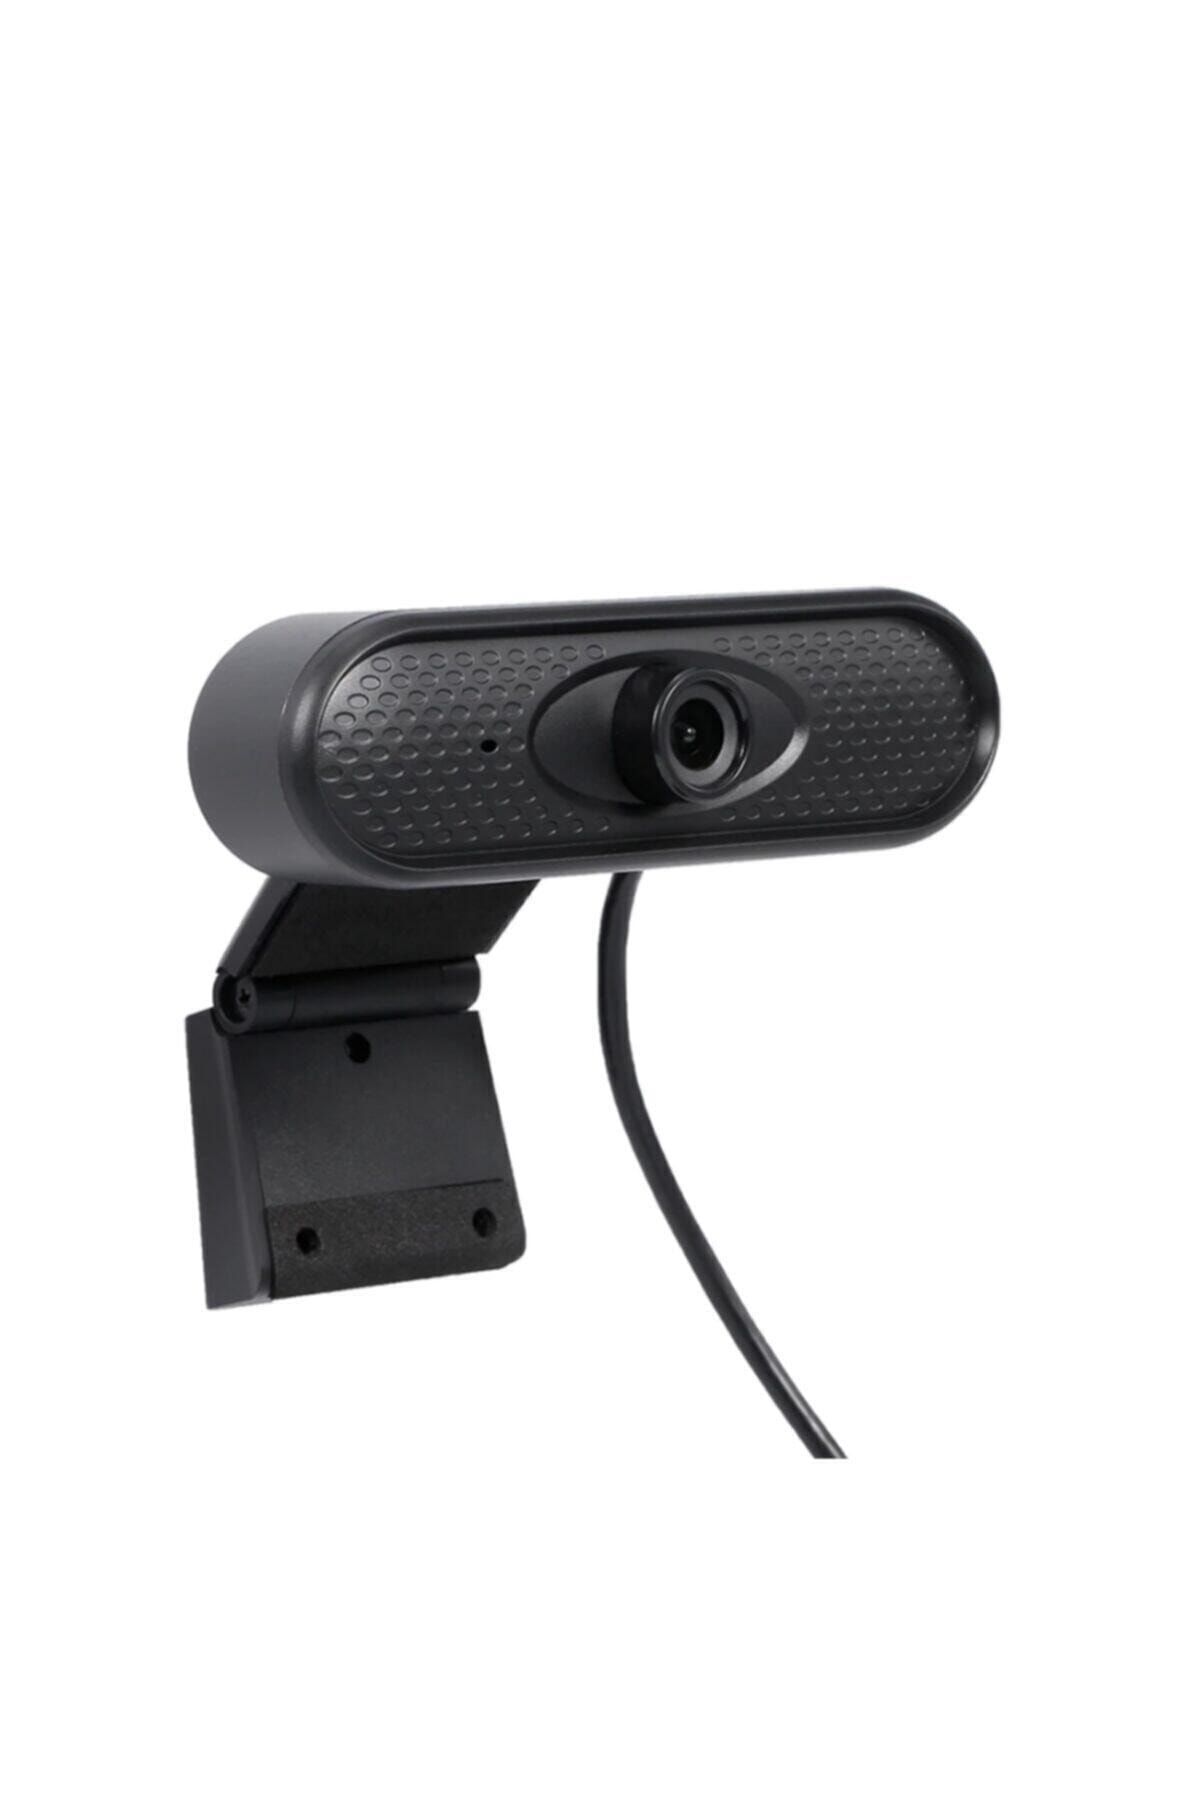 VALX Vc-1080 1080p Mikrofonlu Webcam Pc Kamera